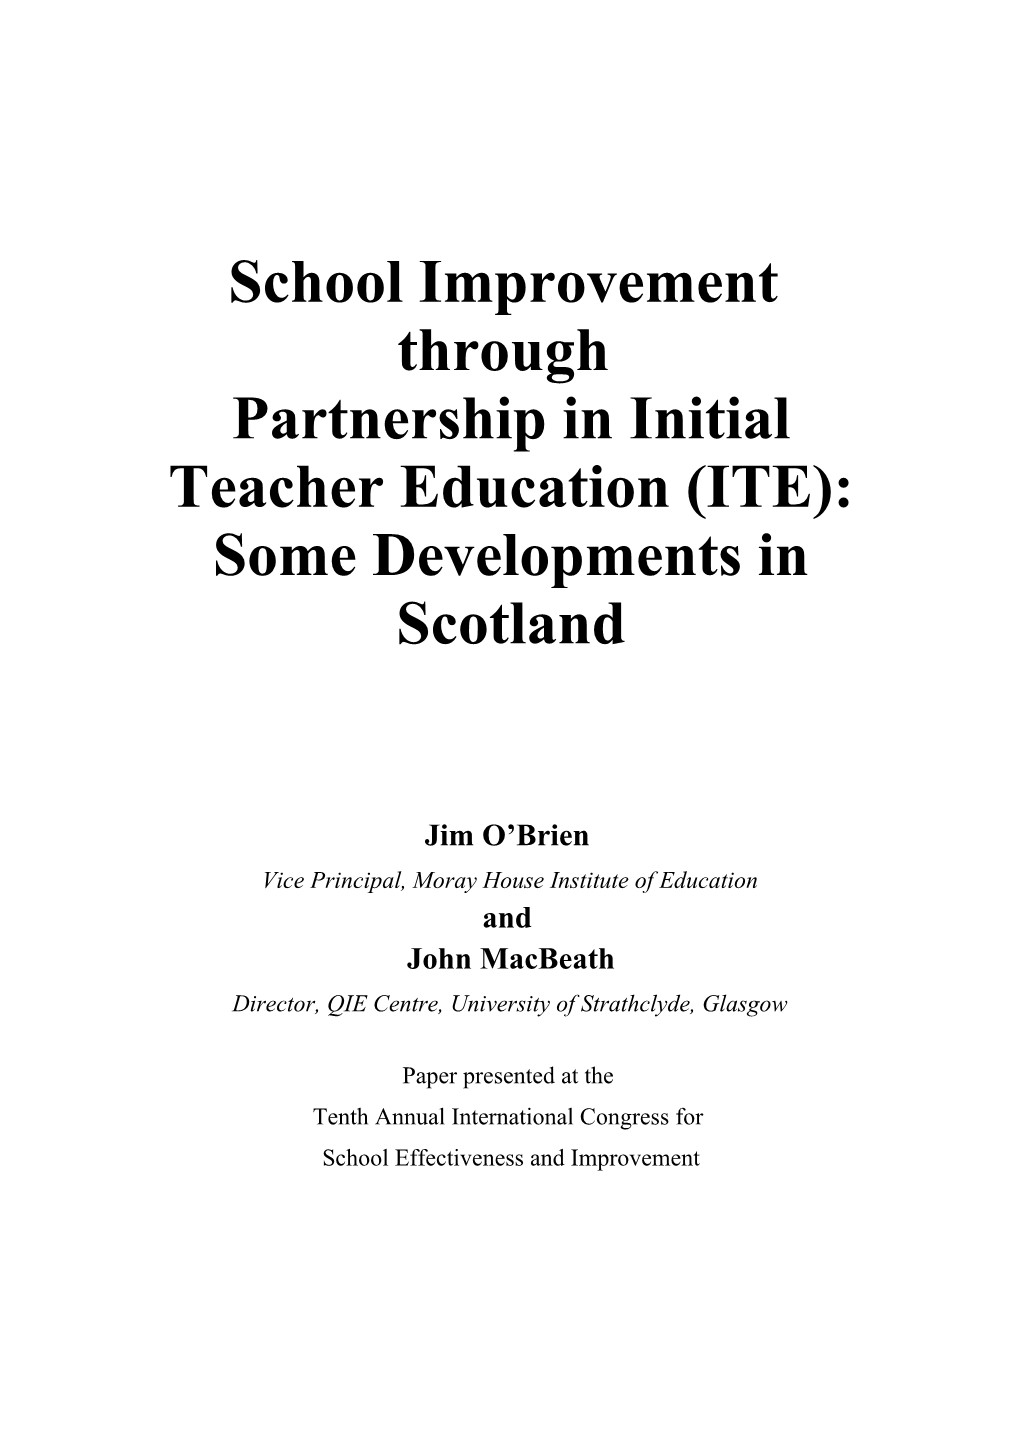 School Improvement Through Partnership in Initial Teacher Education (ITE)